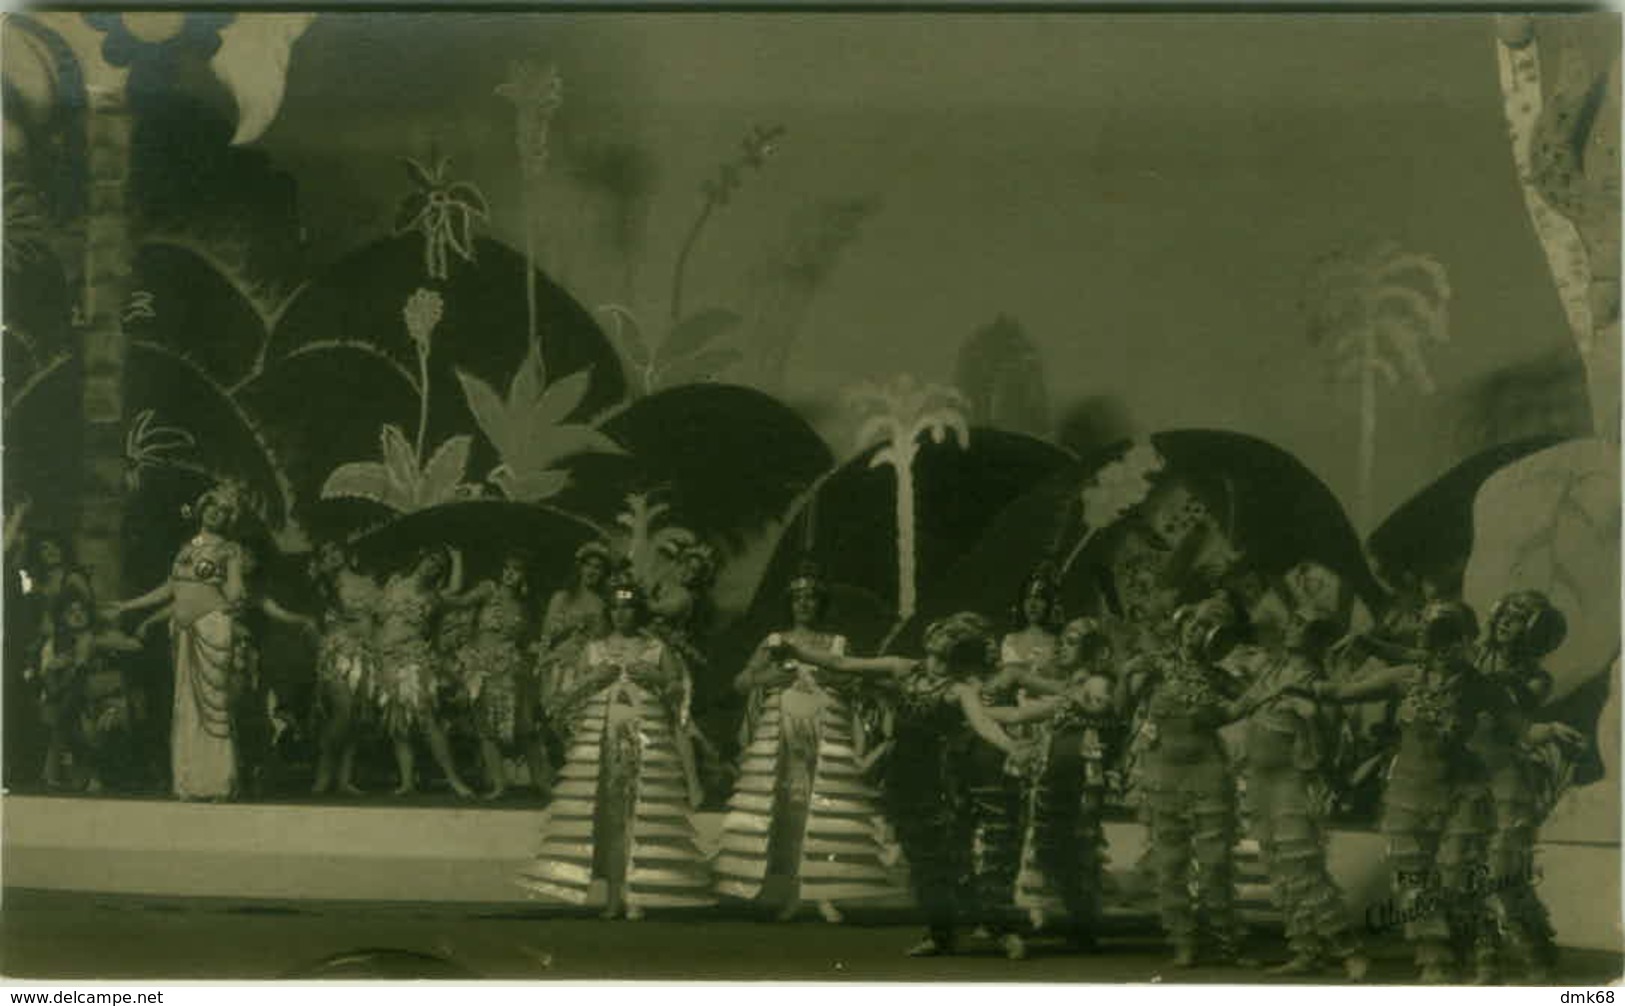 OPERA - EBON STRANDIN - SIMSON OCH DELILA - PHOTO BY ALMBERG & PREINITZ STOCKHOLM  - RPPC POSTCARD 1920s (BG1381) - Cantanti E Musicisti